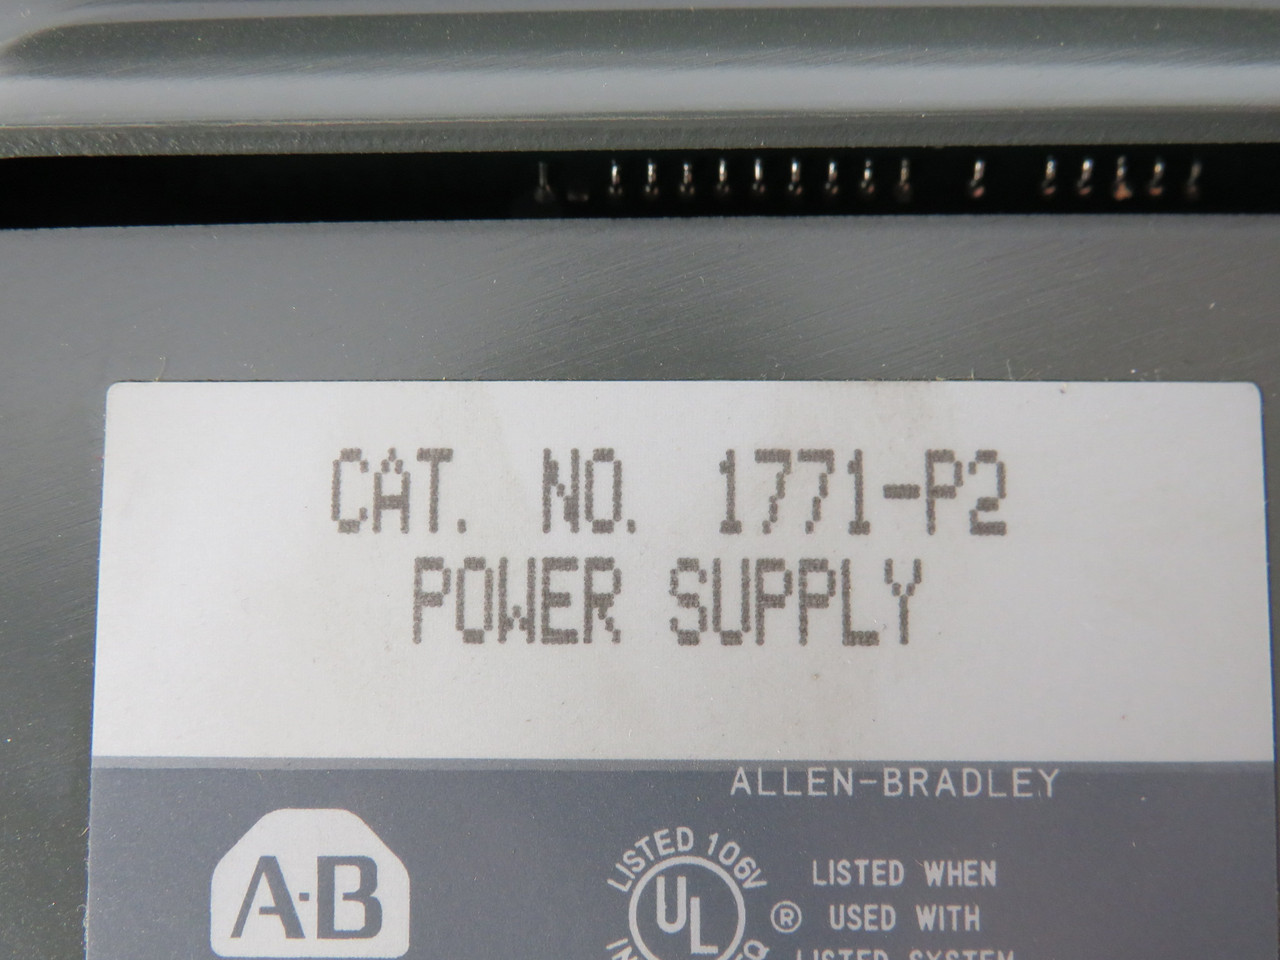 Allen-Bradley 1771-P2 Power Supply 75VA MISSING FUSE HOLDER CAP USED